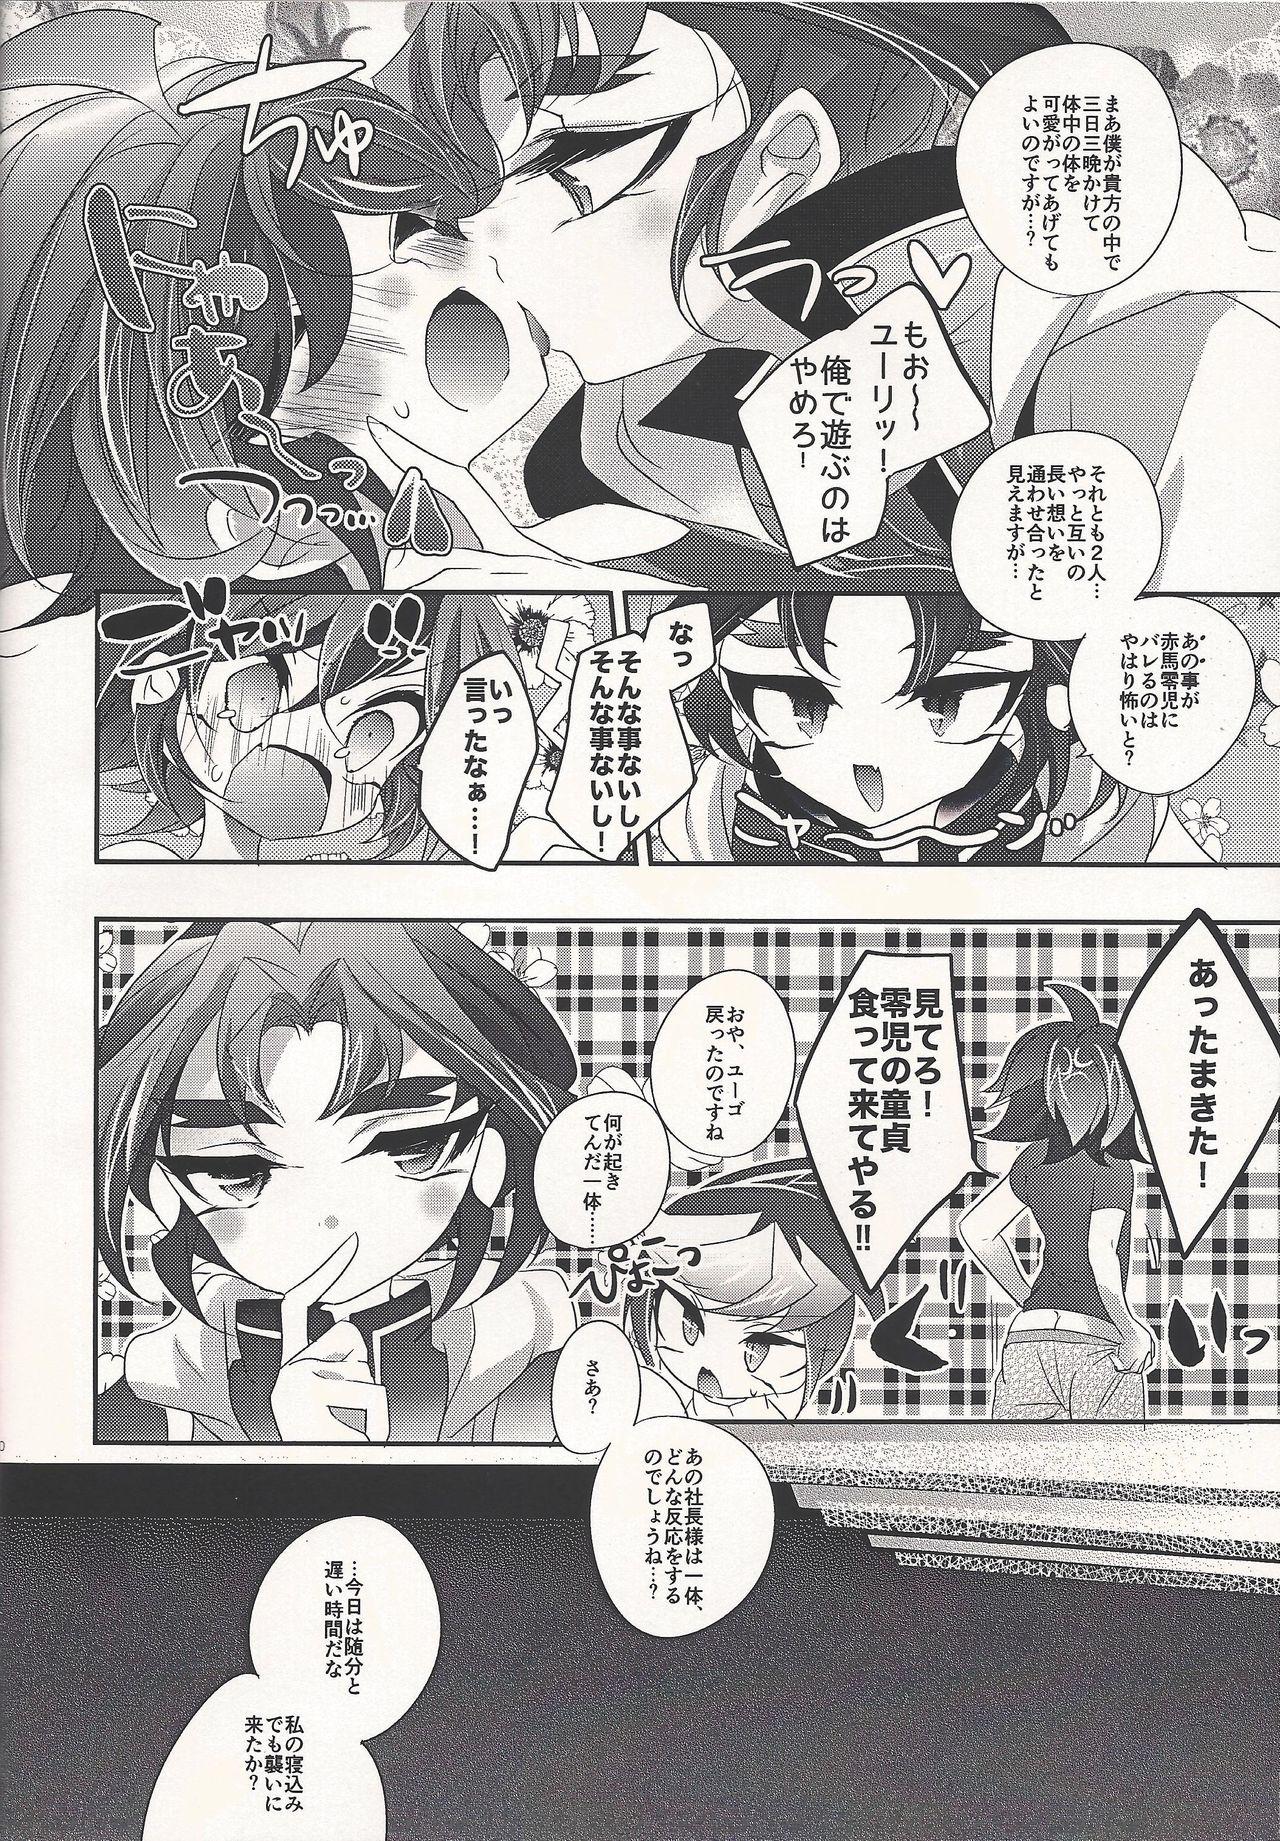 Red Fantomu-sama no ××× - Yu-gi-oh arc-v Class - Page 10